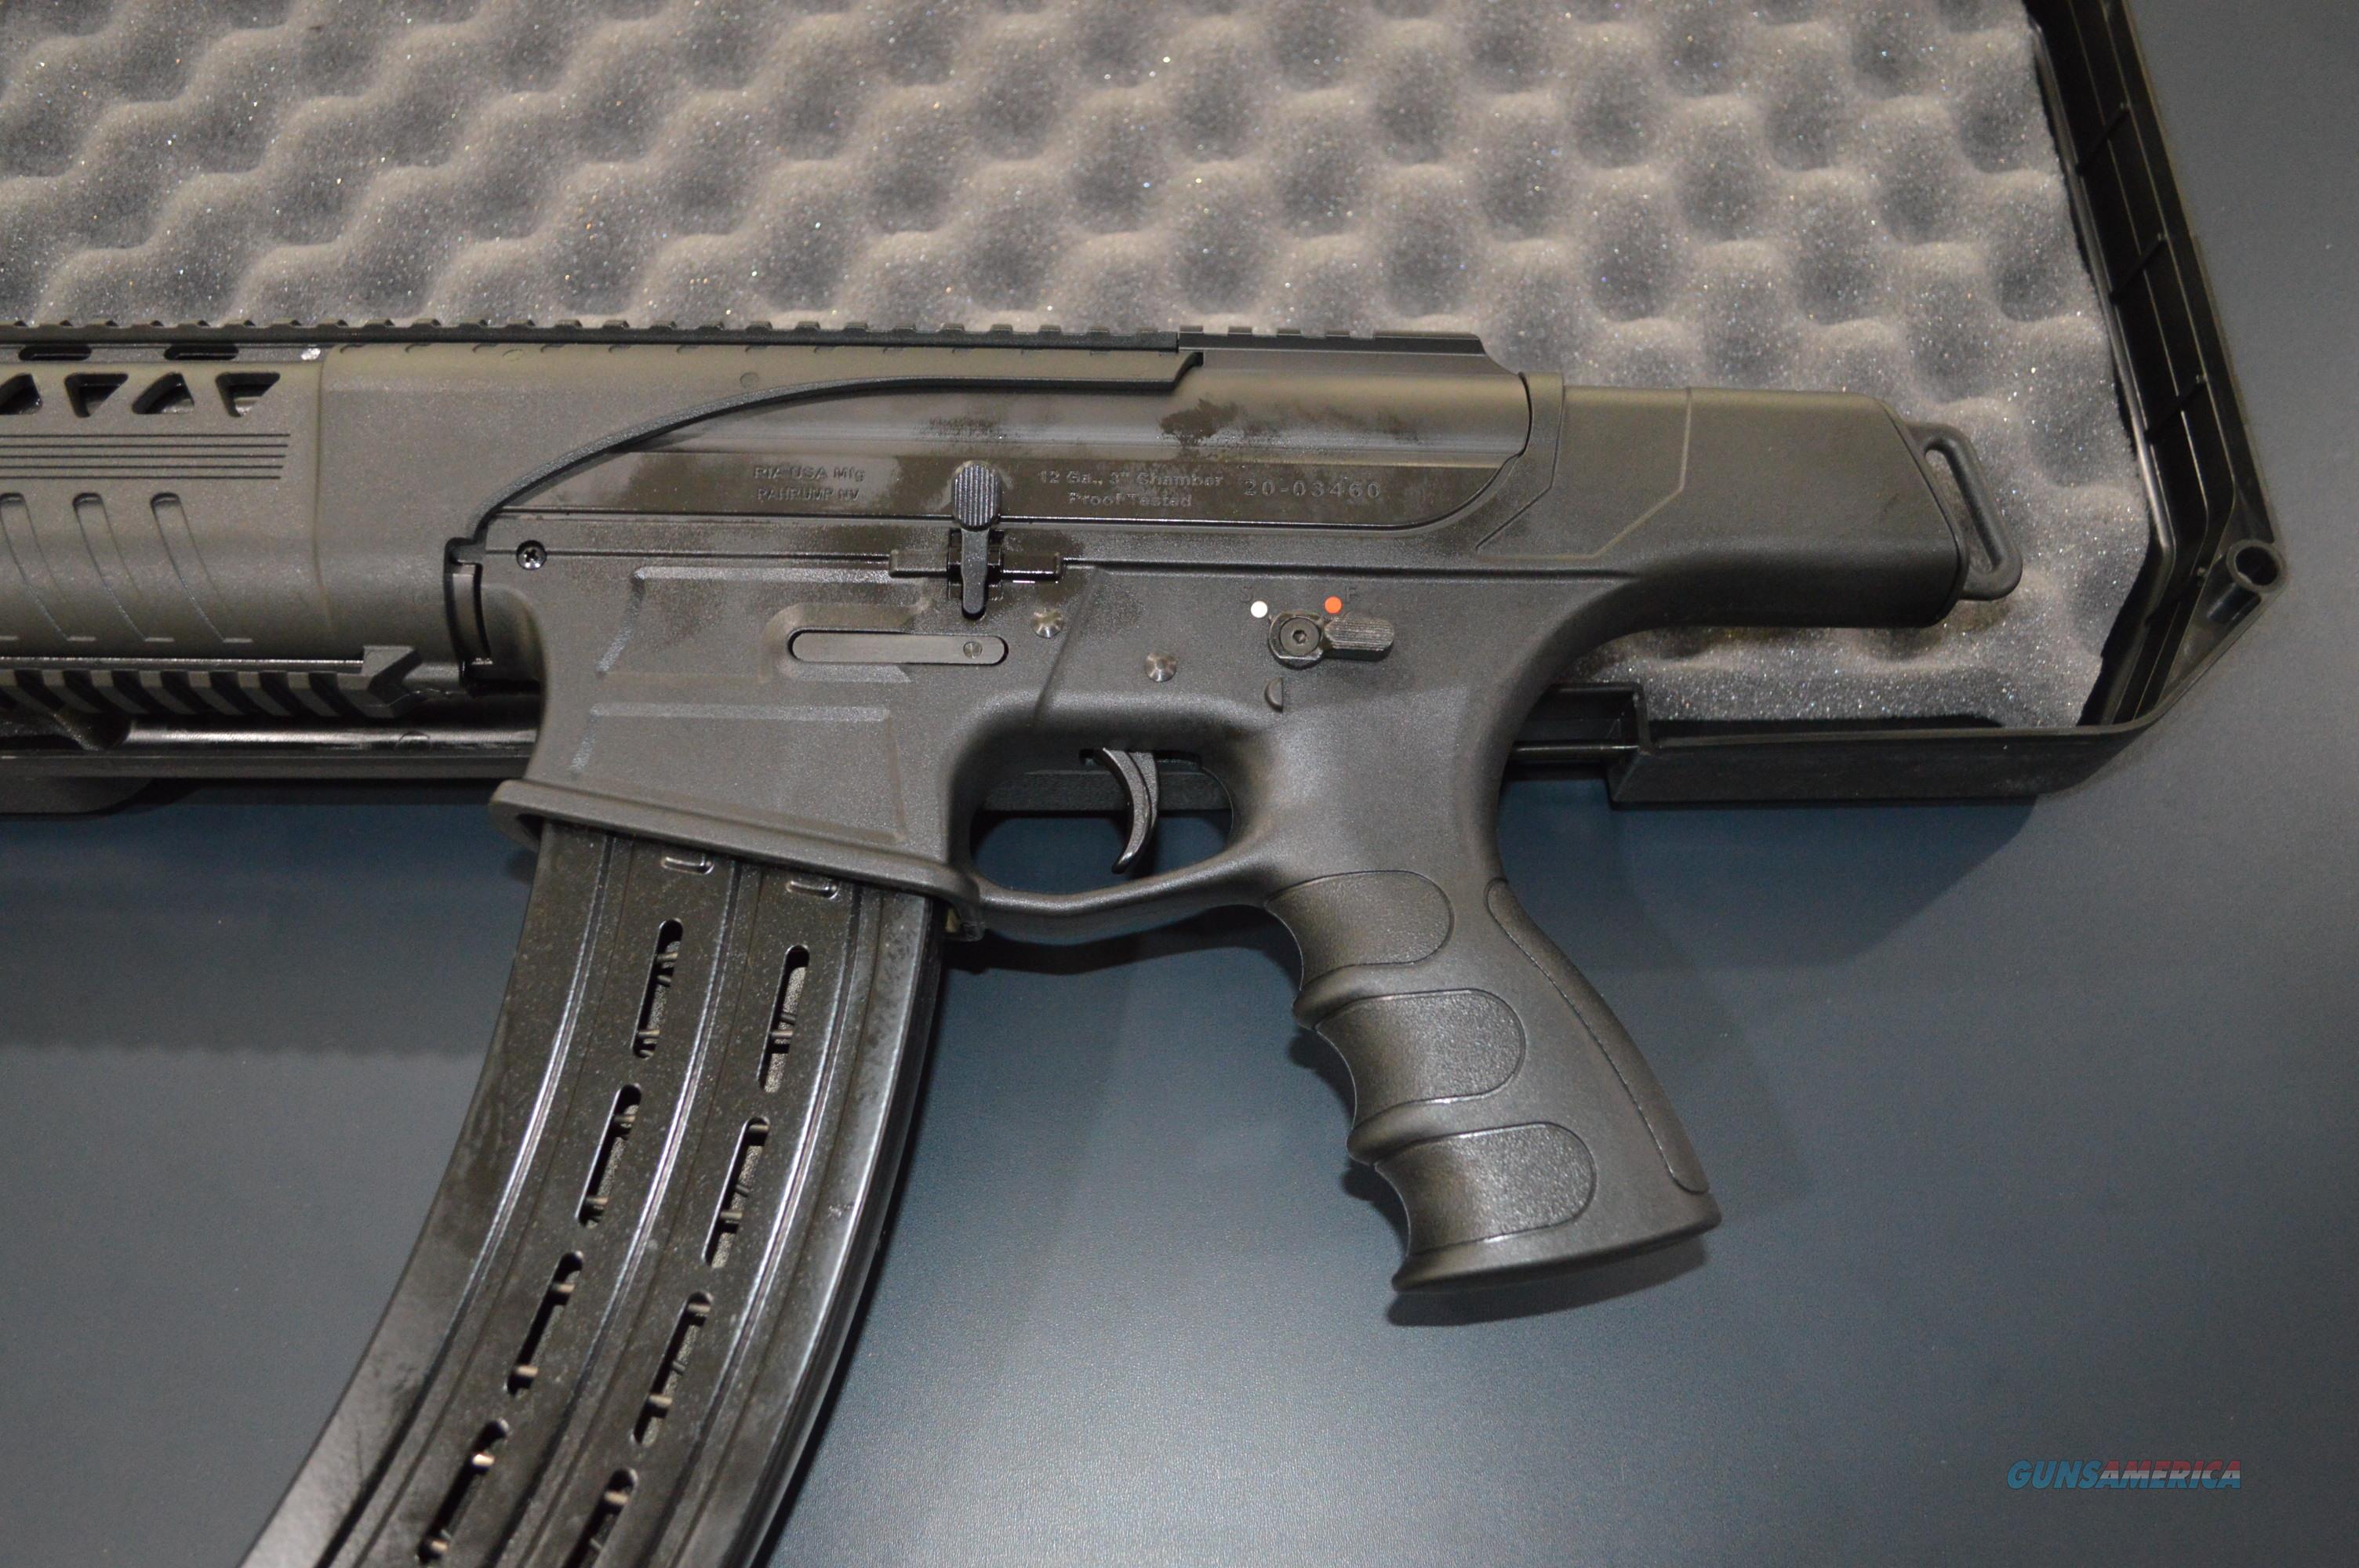 Armscor Vrf14 Pistol Grip Firearm 1 For Sale At 958971644 1494